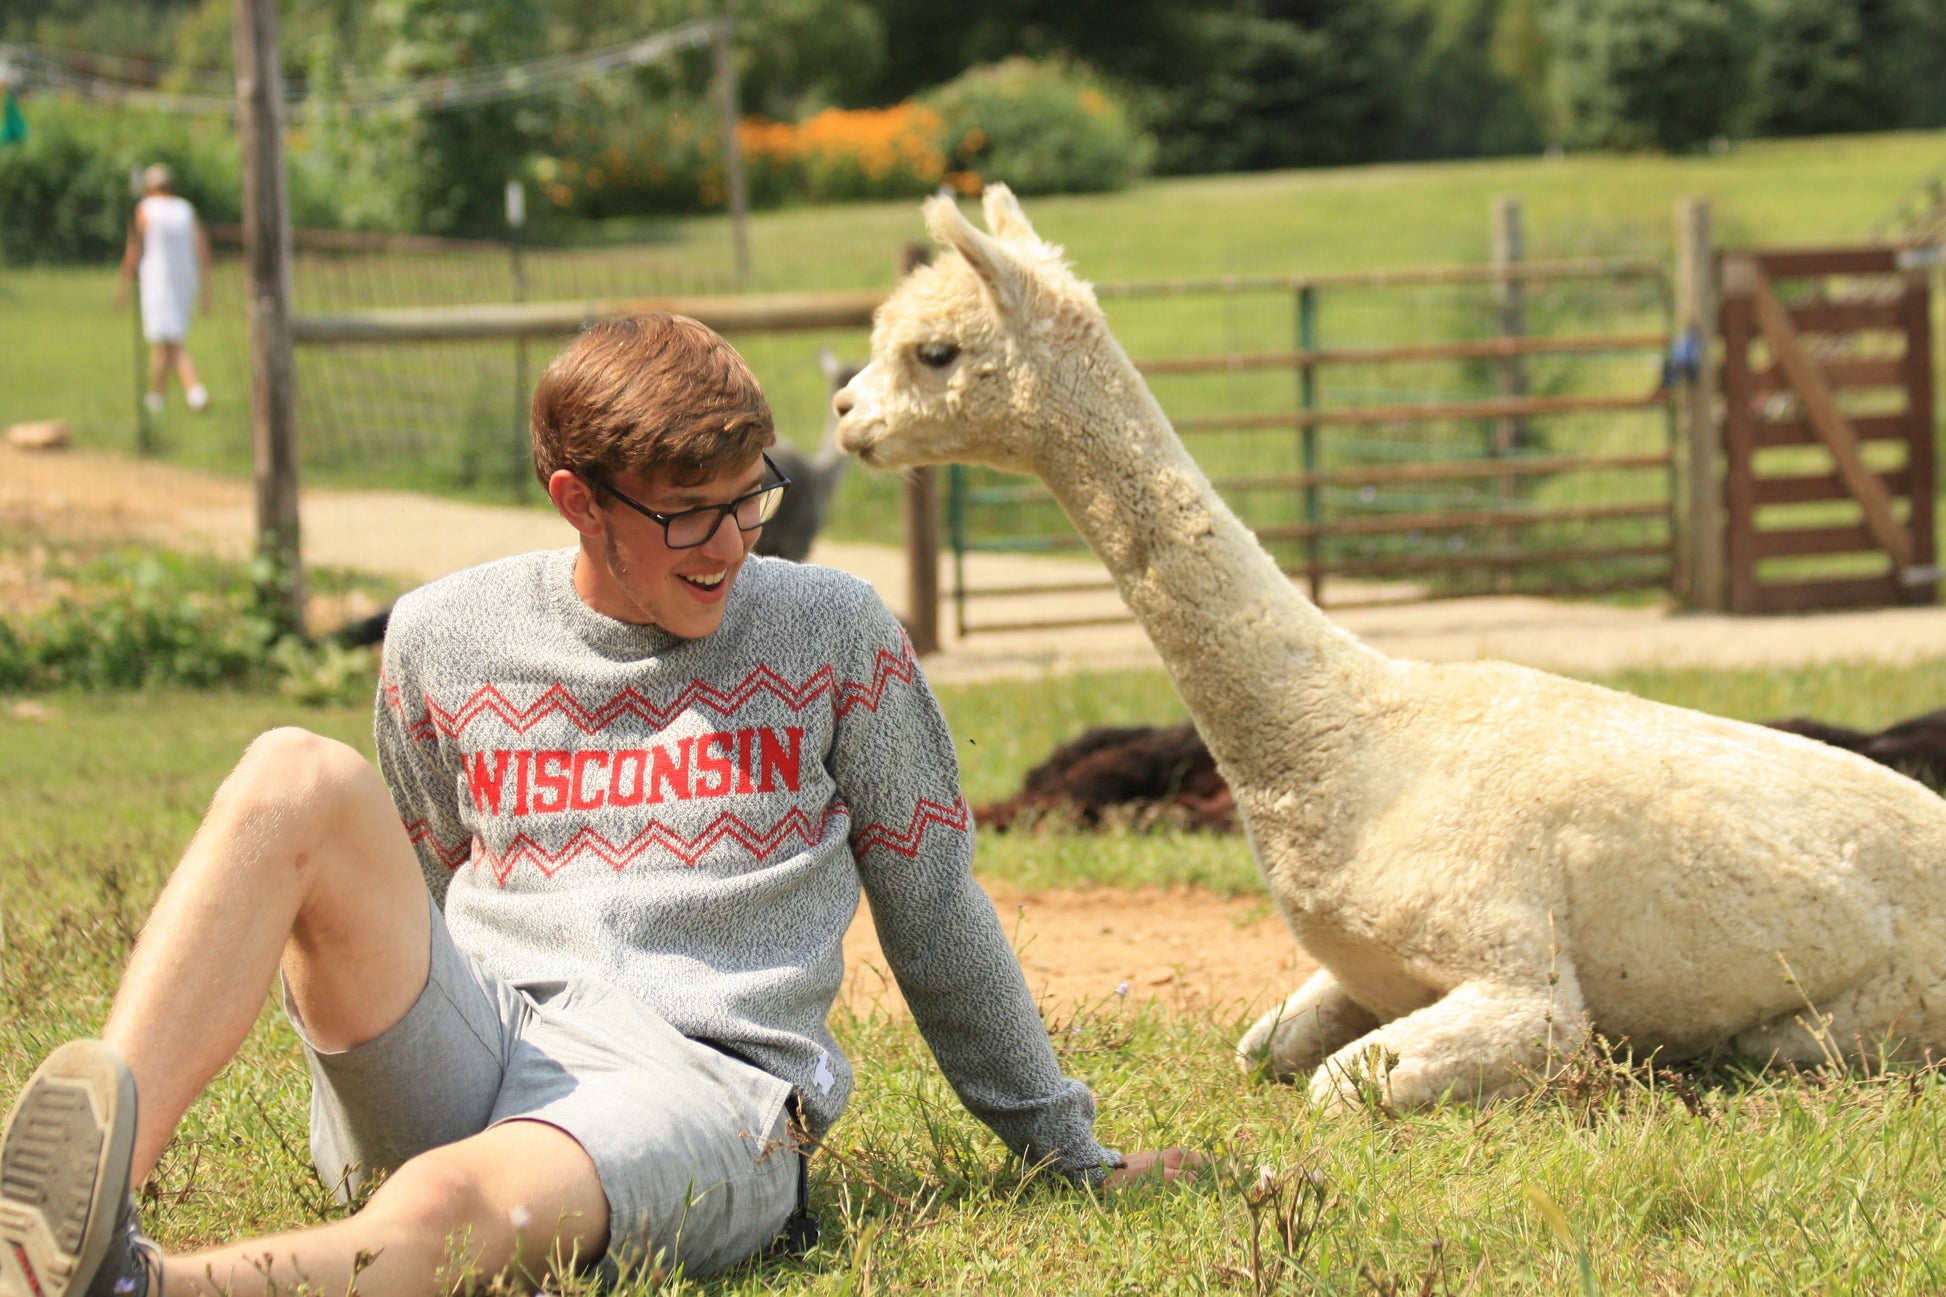 Boy in Wisconsin Crew Neck with alpaca